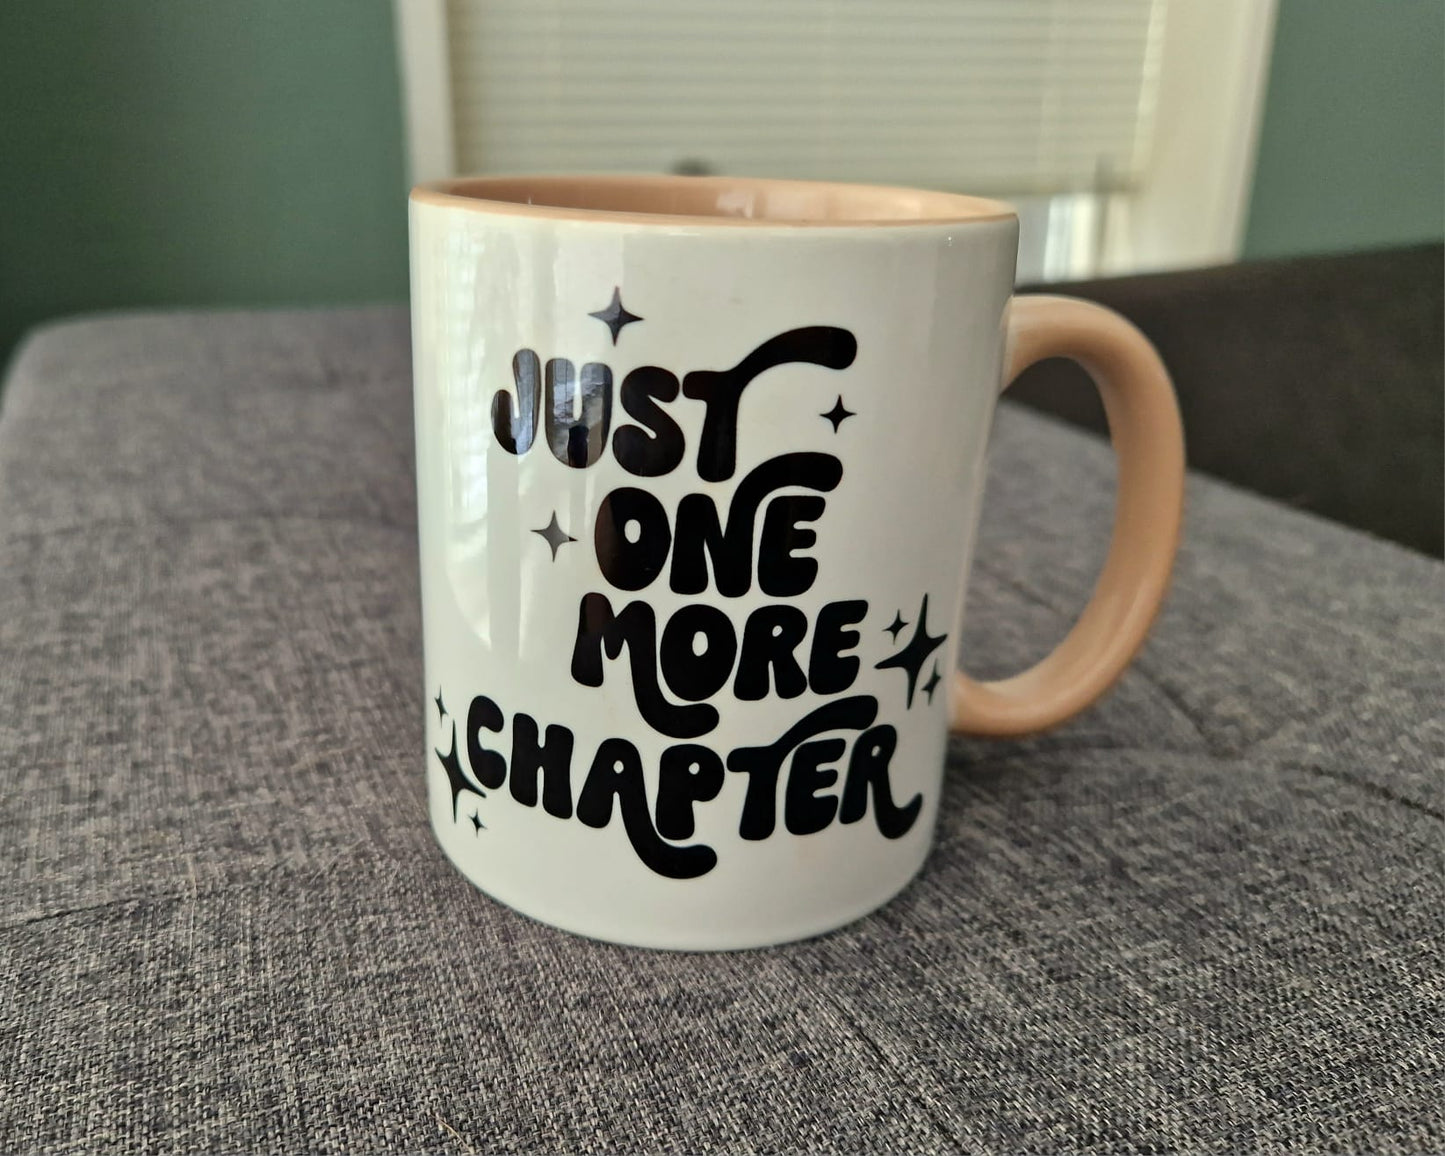 Bookish Mug - "Just one more chapter"